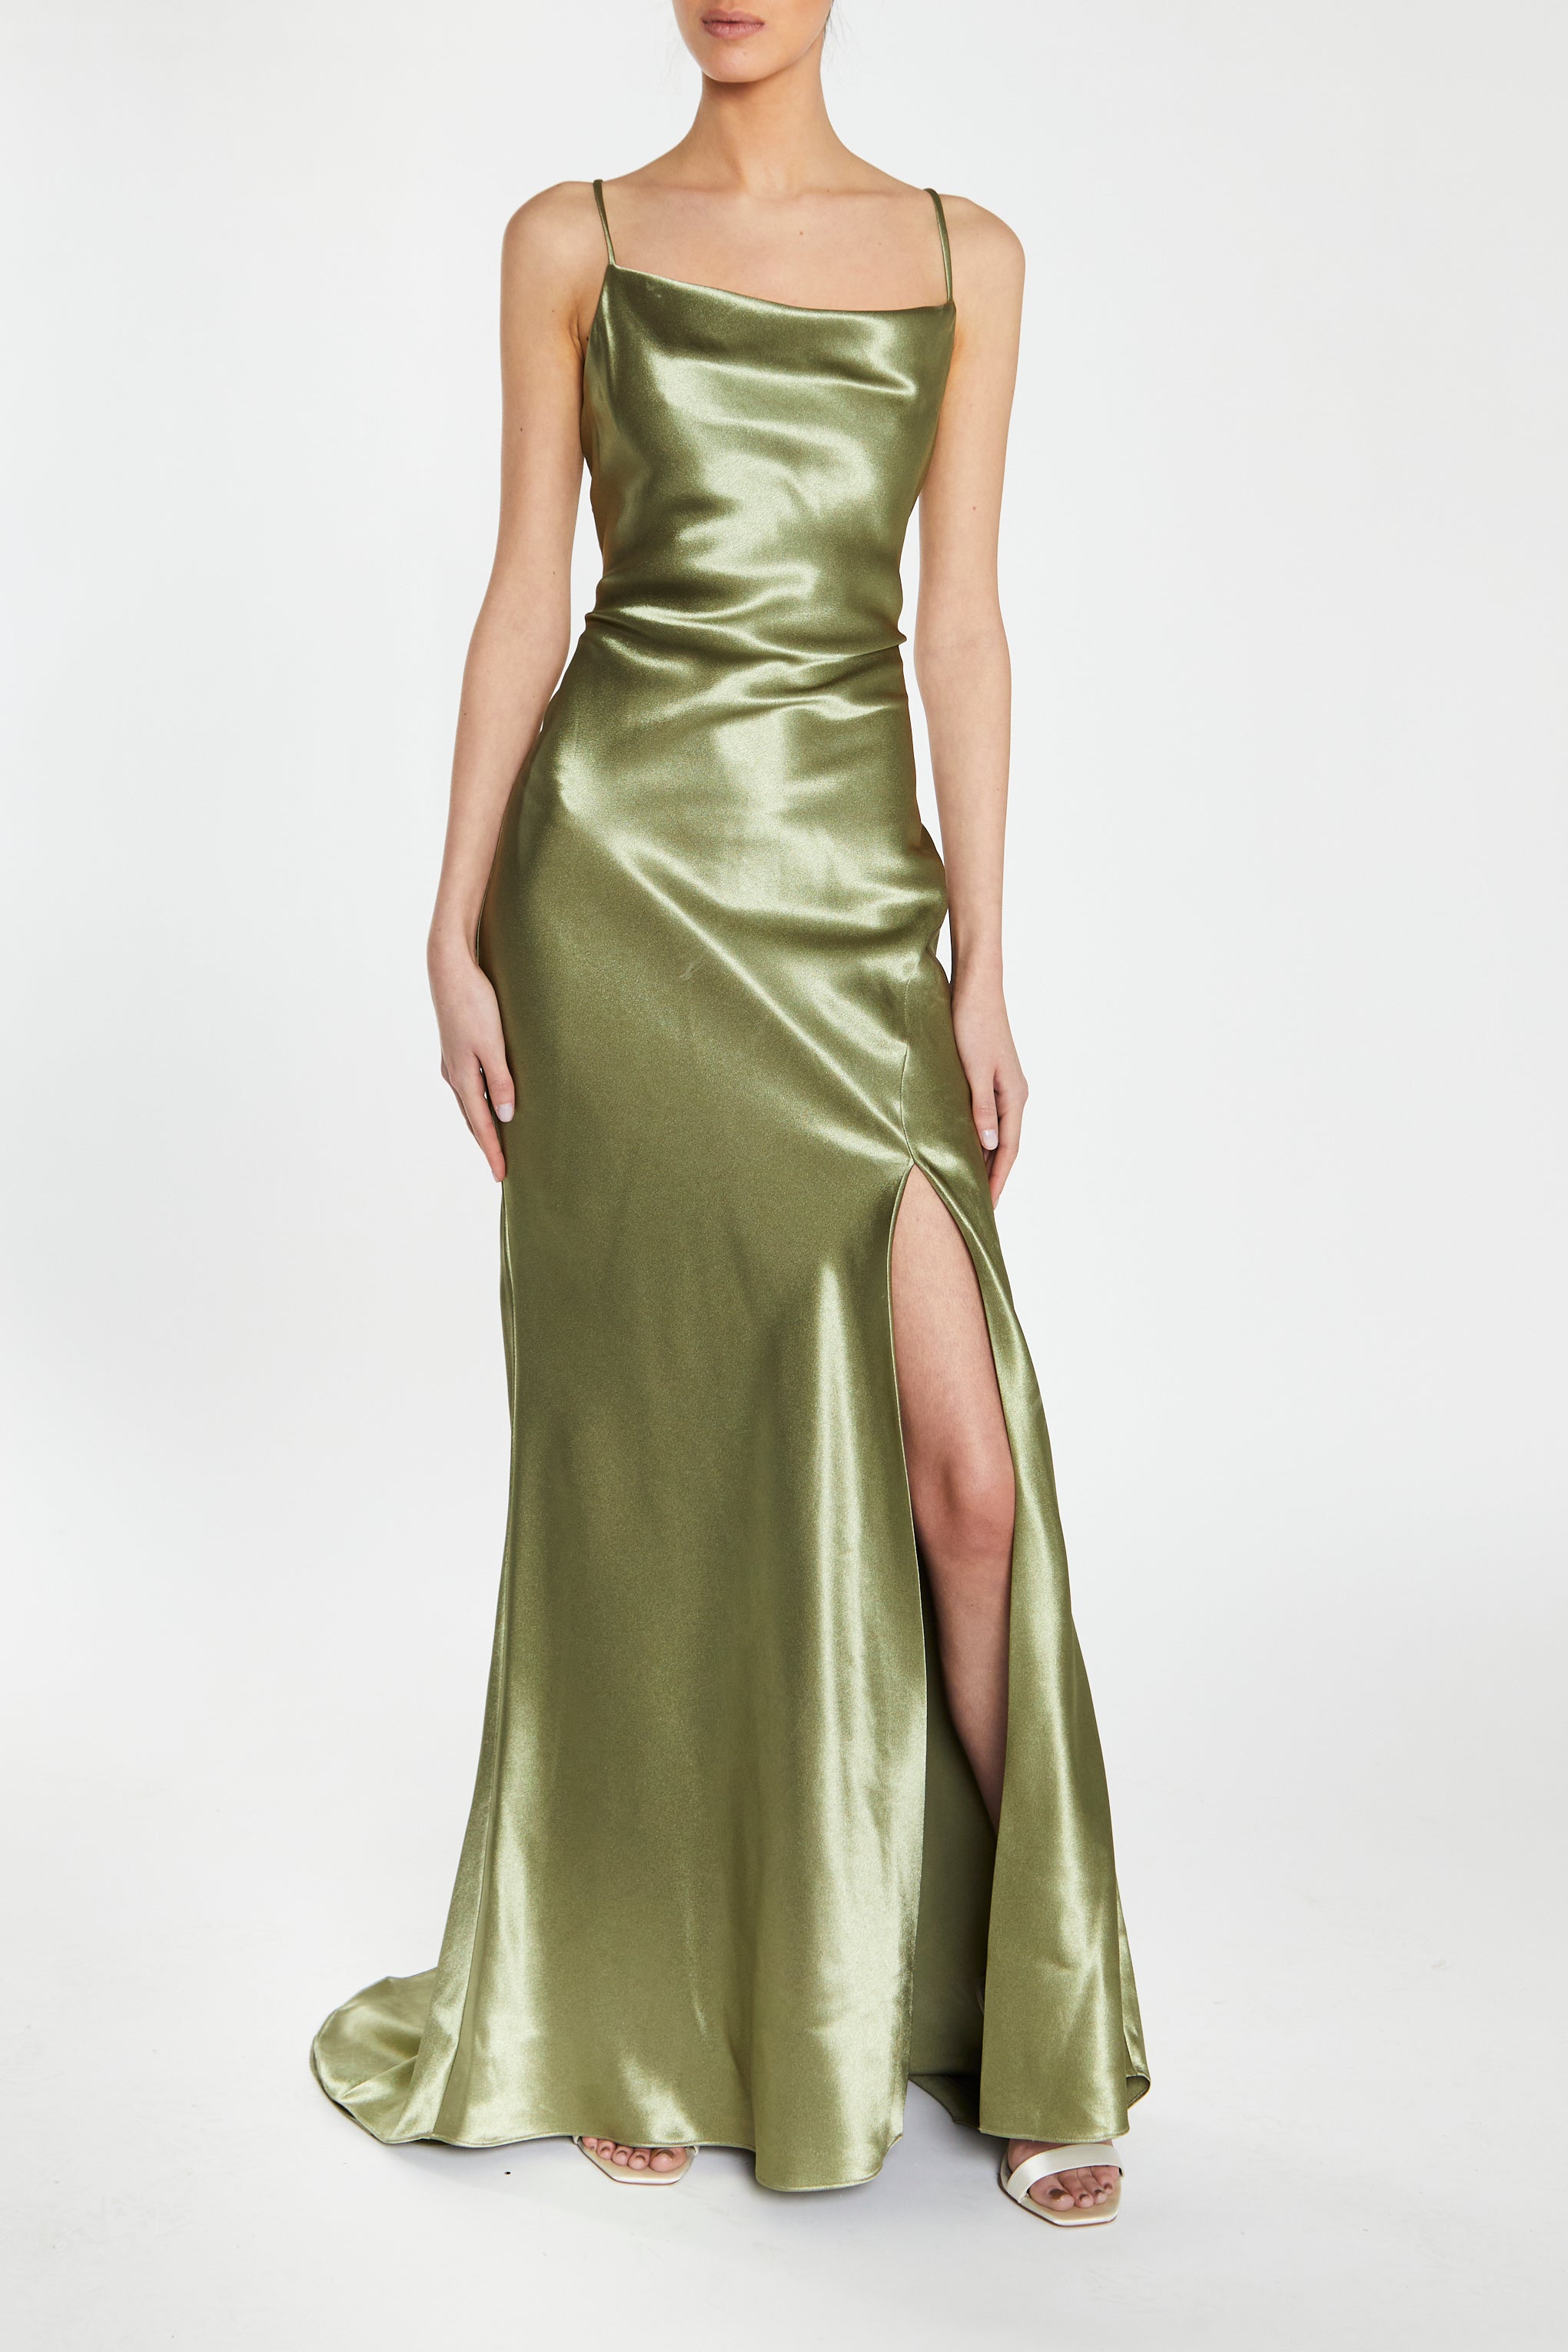 Pippa Sage Green Bridesmaid Cowl-Neck Slip Dress-image-2